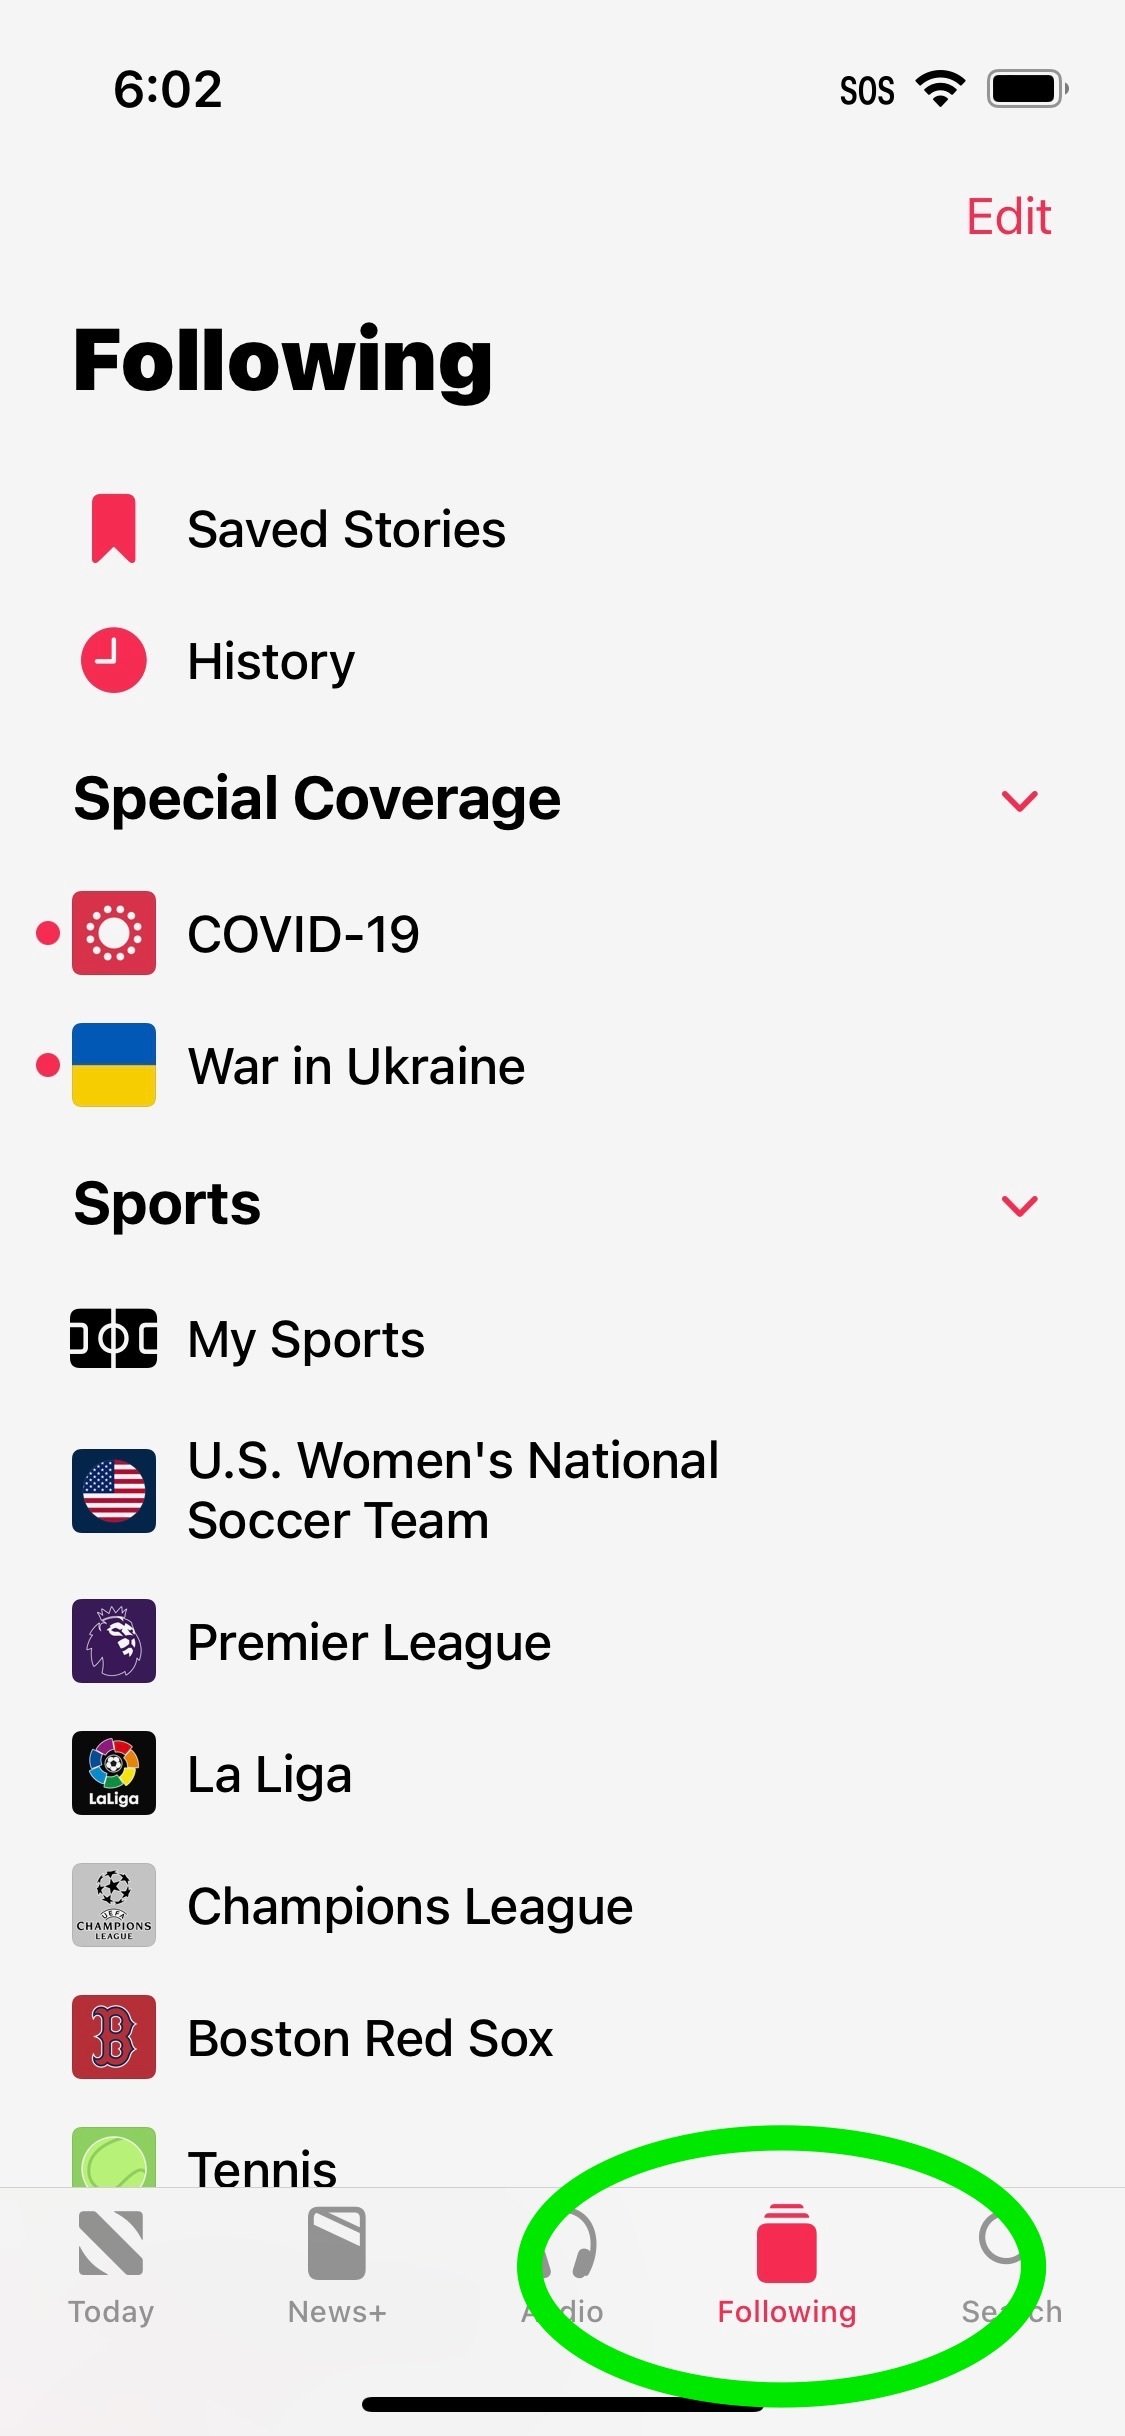 Screenshot of My Sports shortcut in the "Following" tab